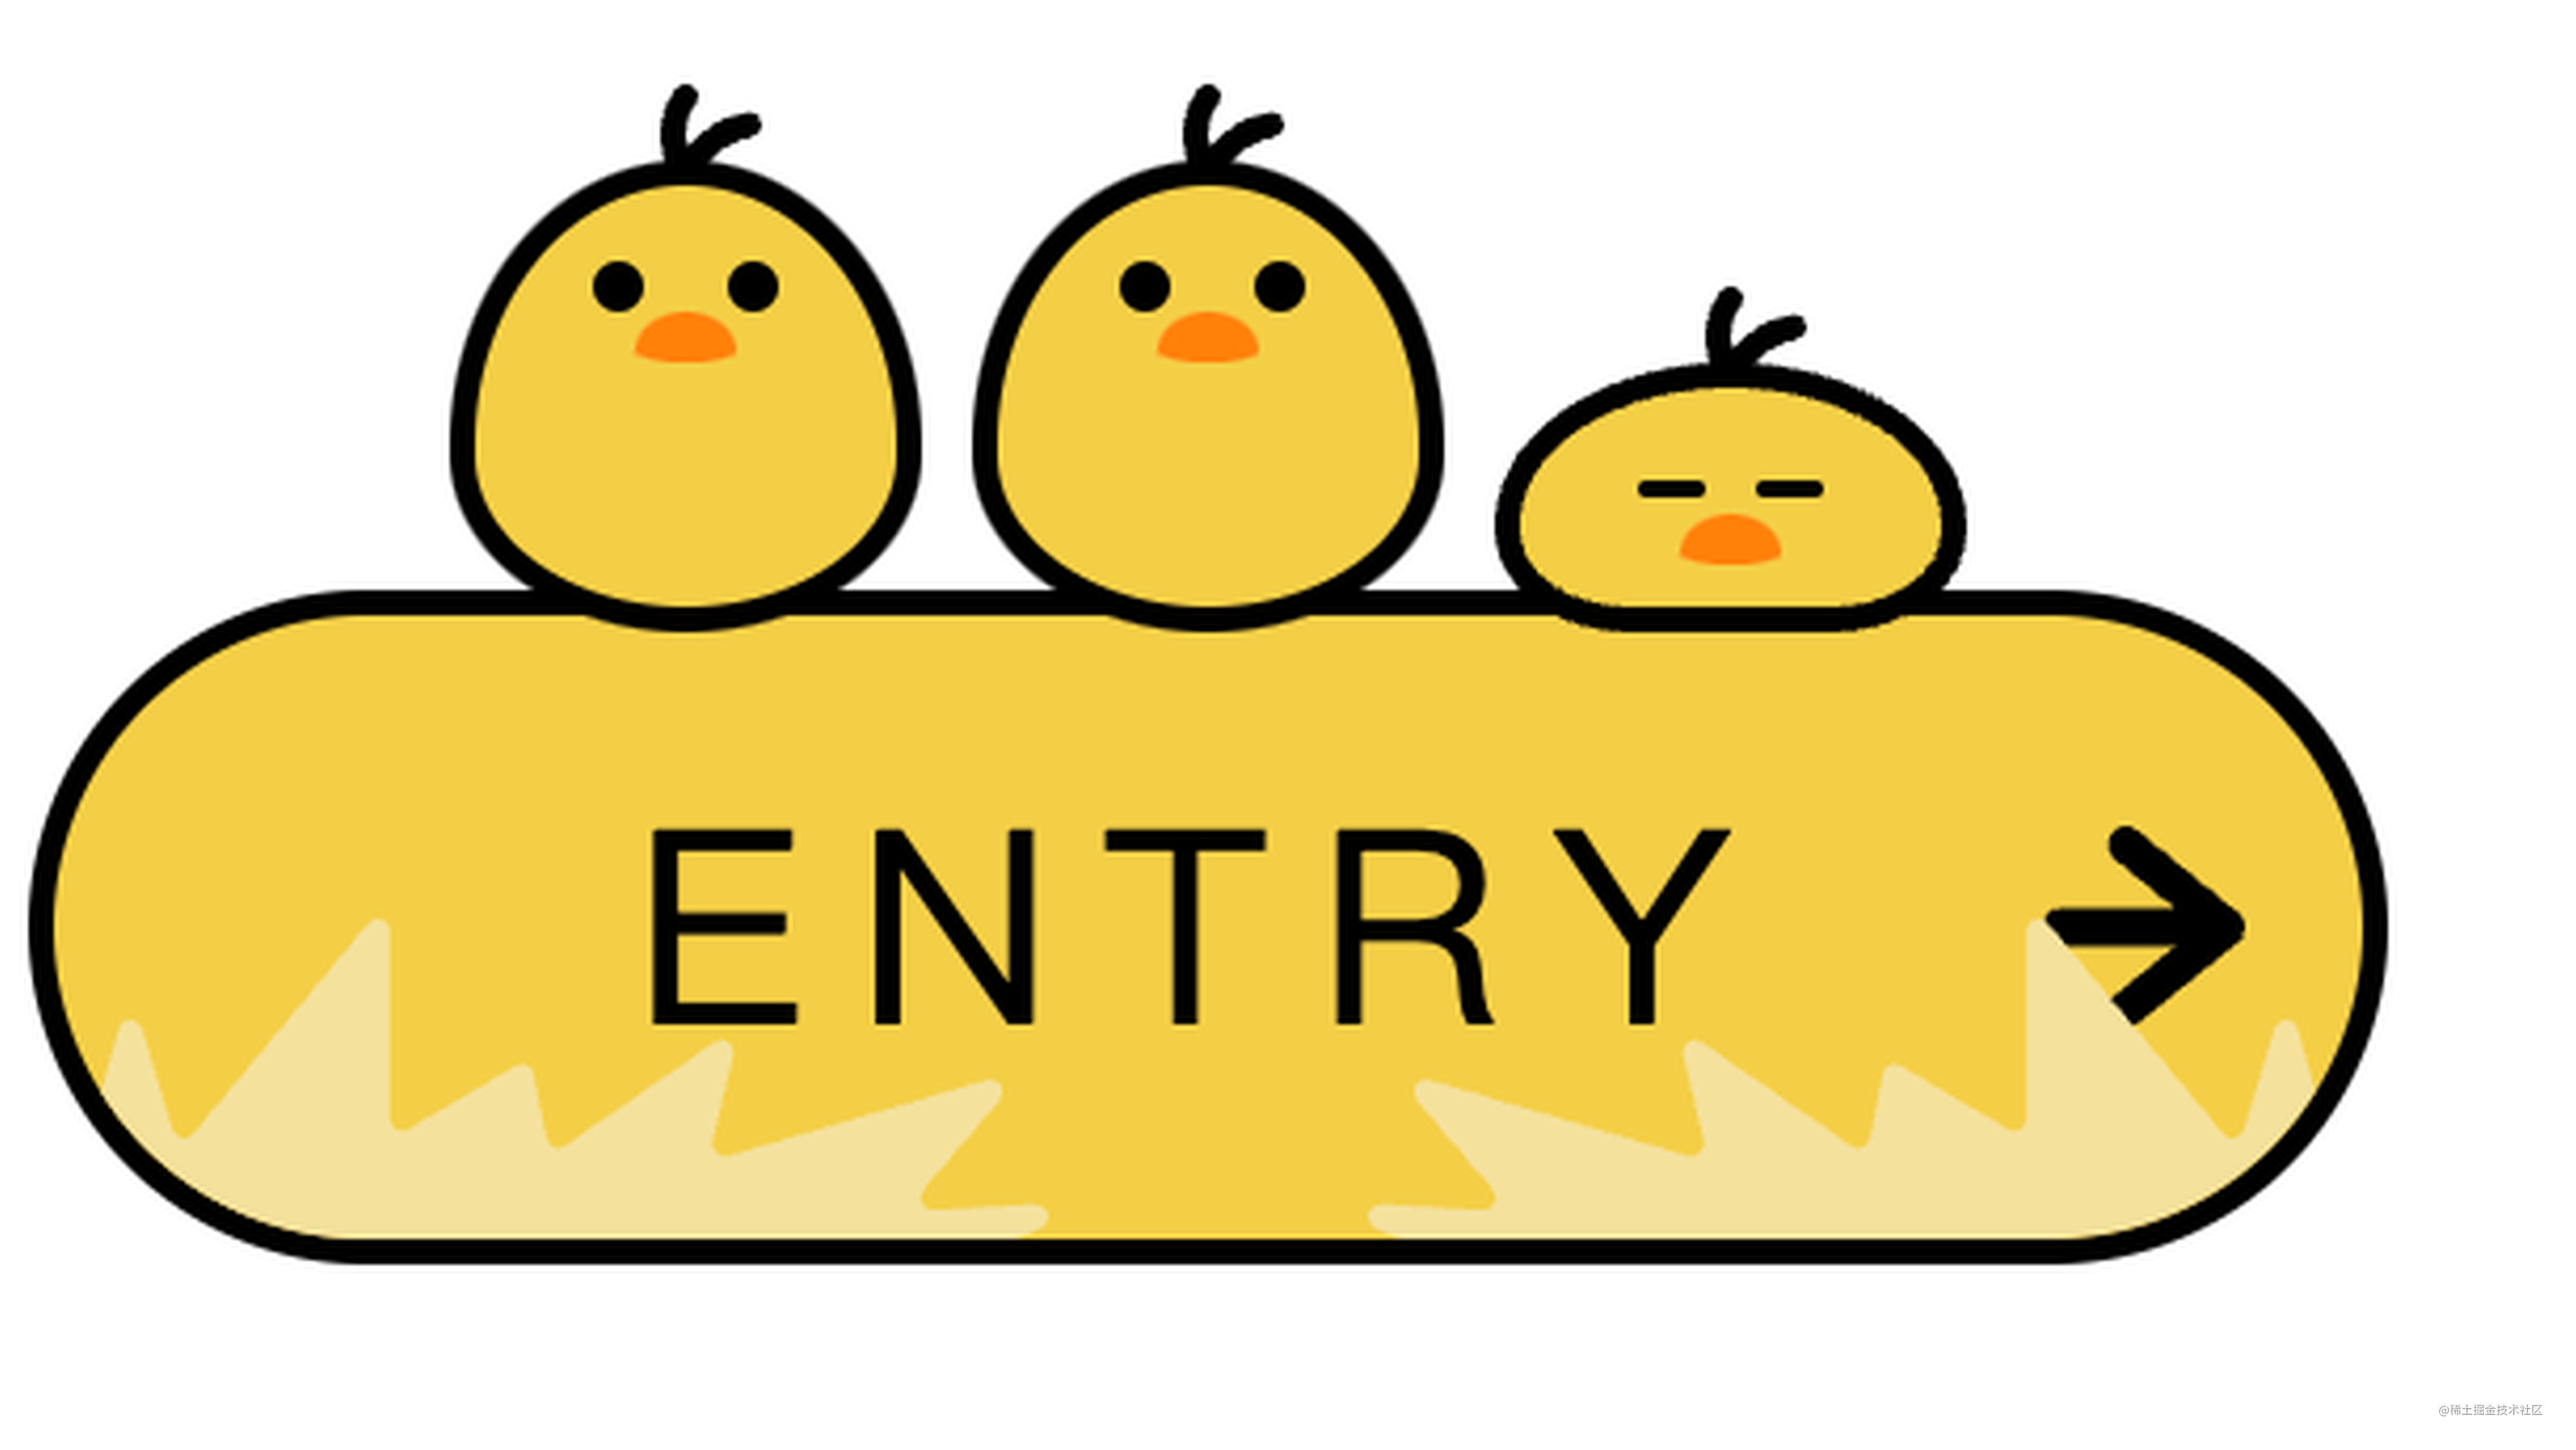 CSS 的快乐：画一个可爱的三只小鸟 Button